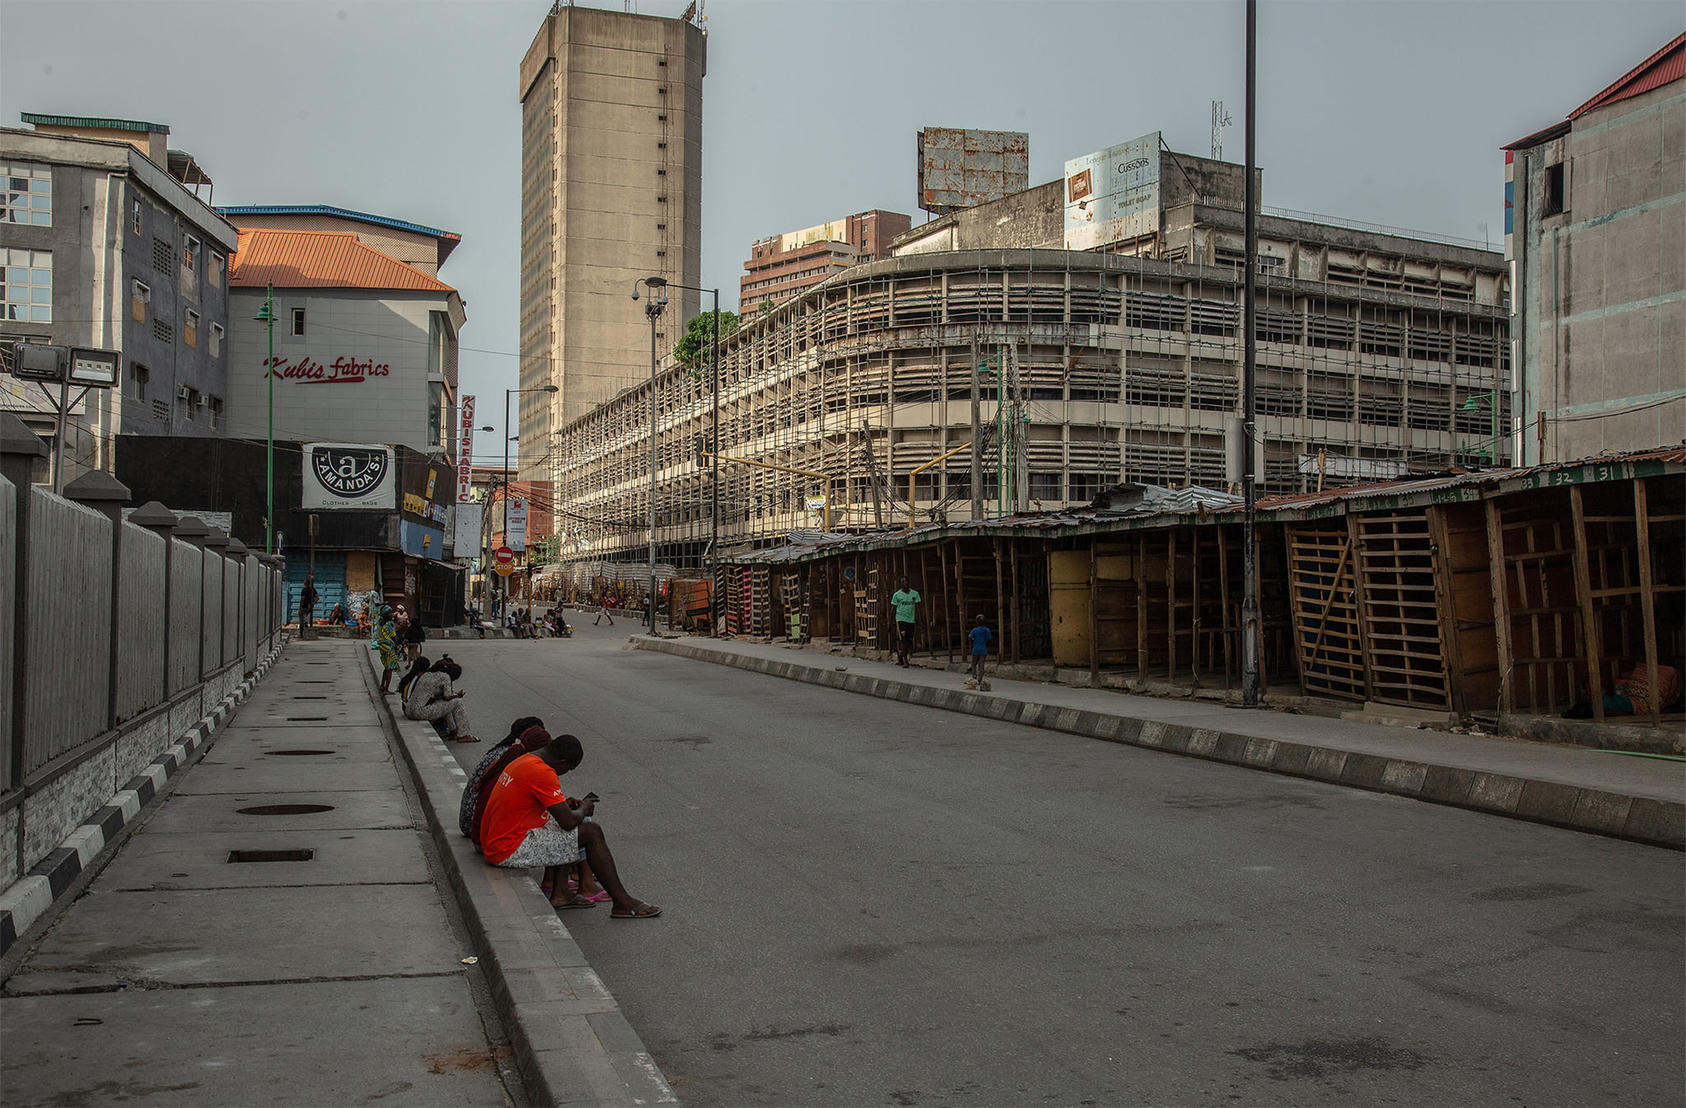 A nearly empty street market in Lagos, Nigeria, April 12, 2020. (Yagazie Emezi/The New York Times)